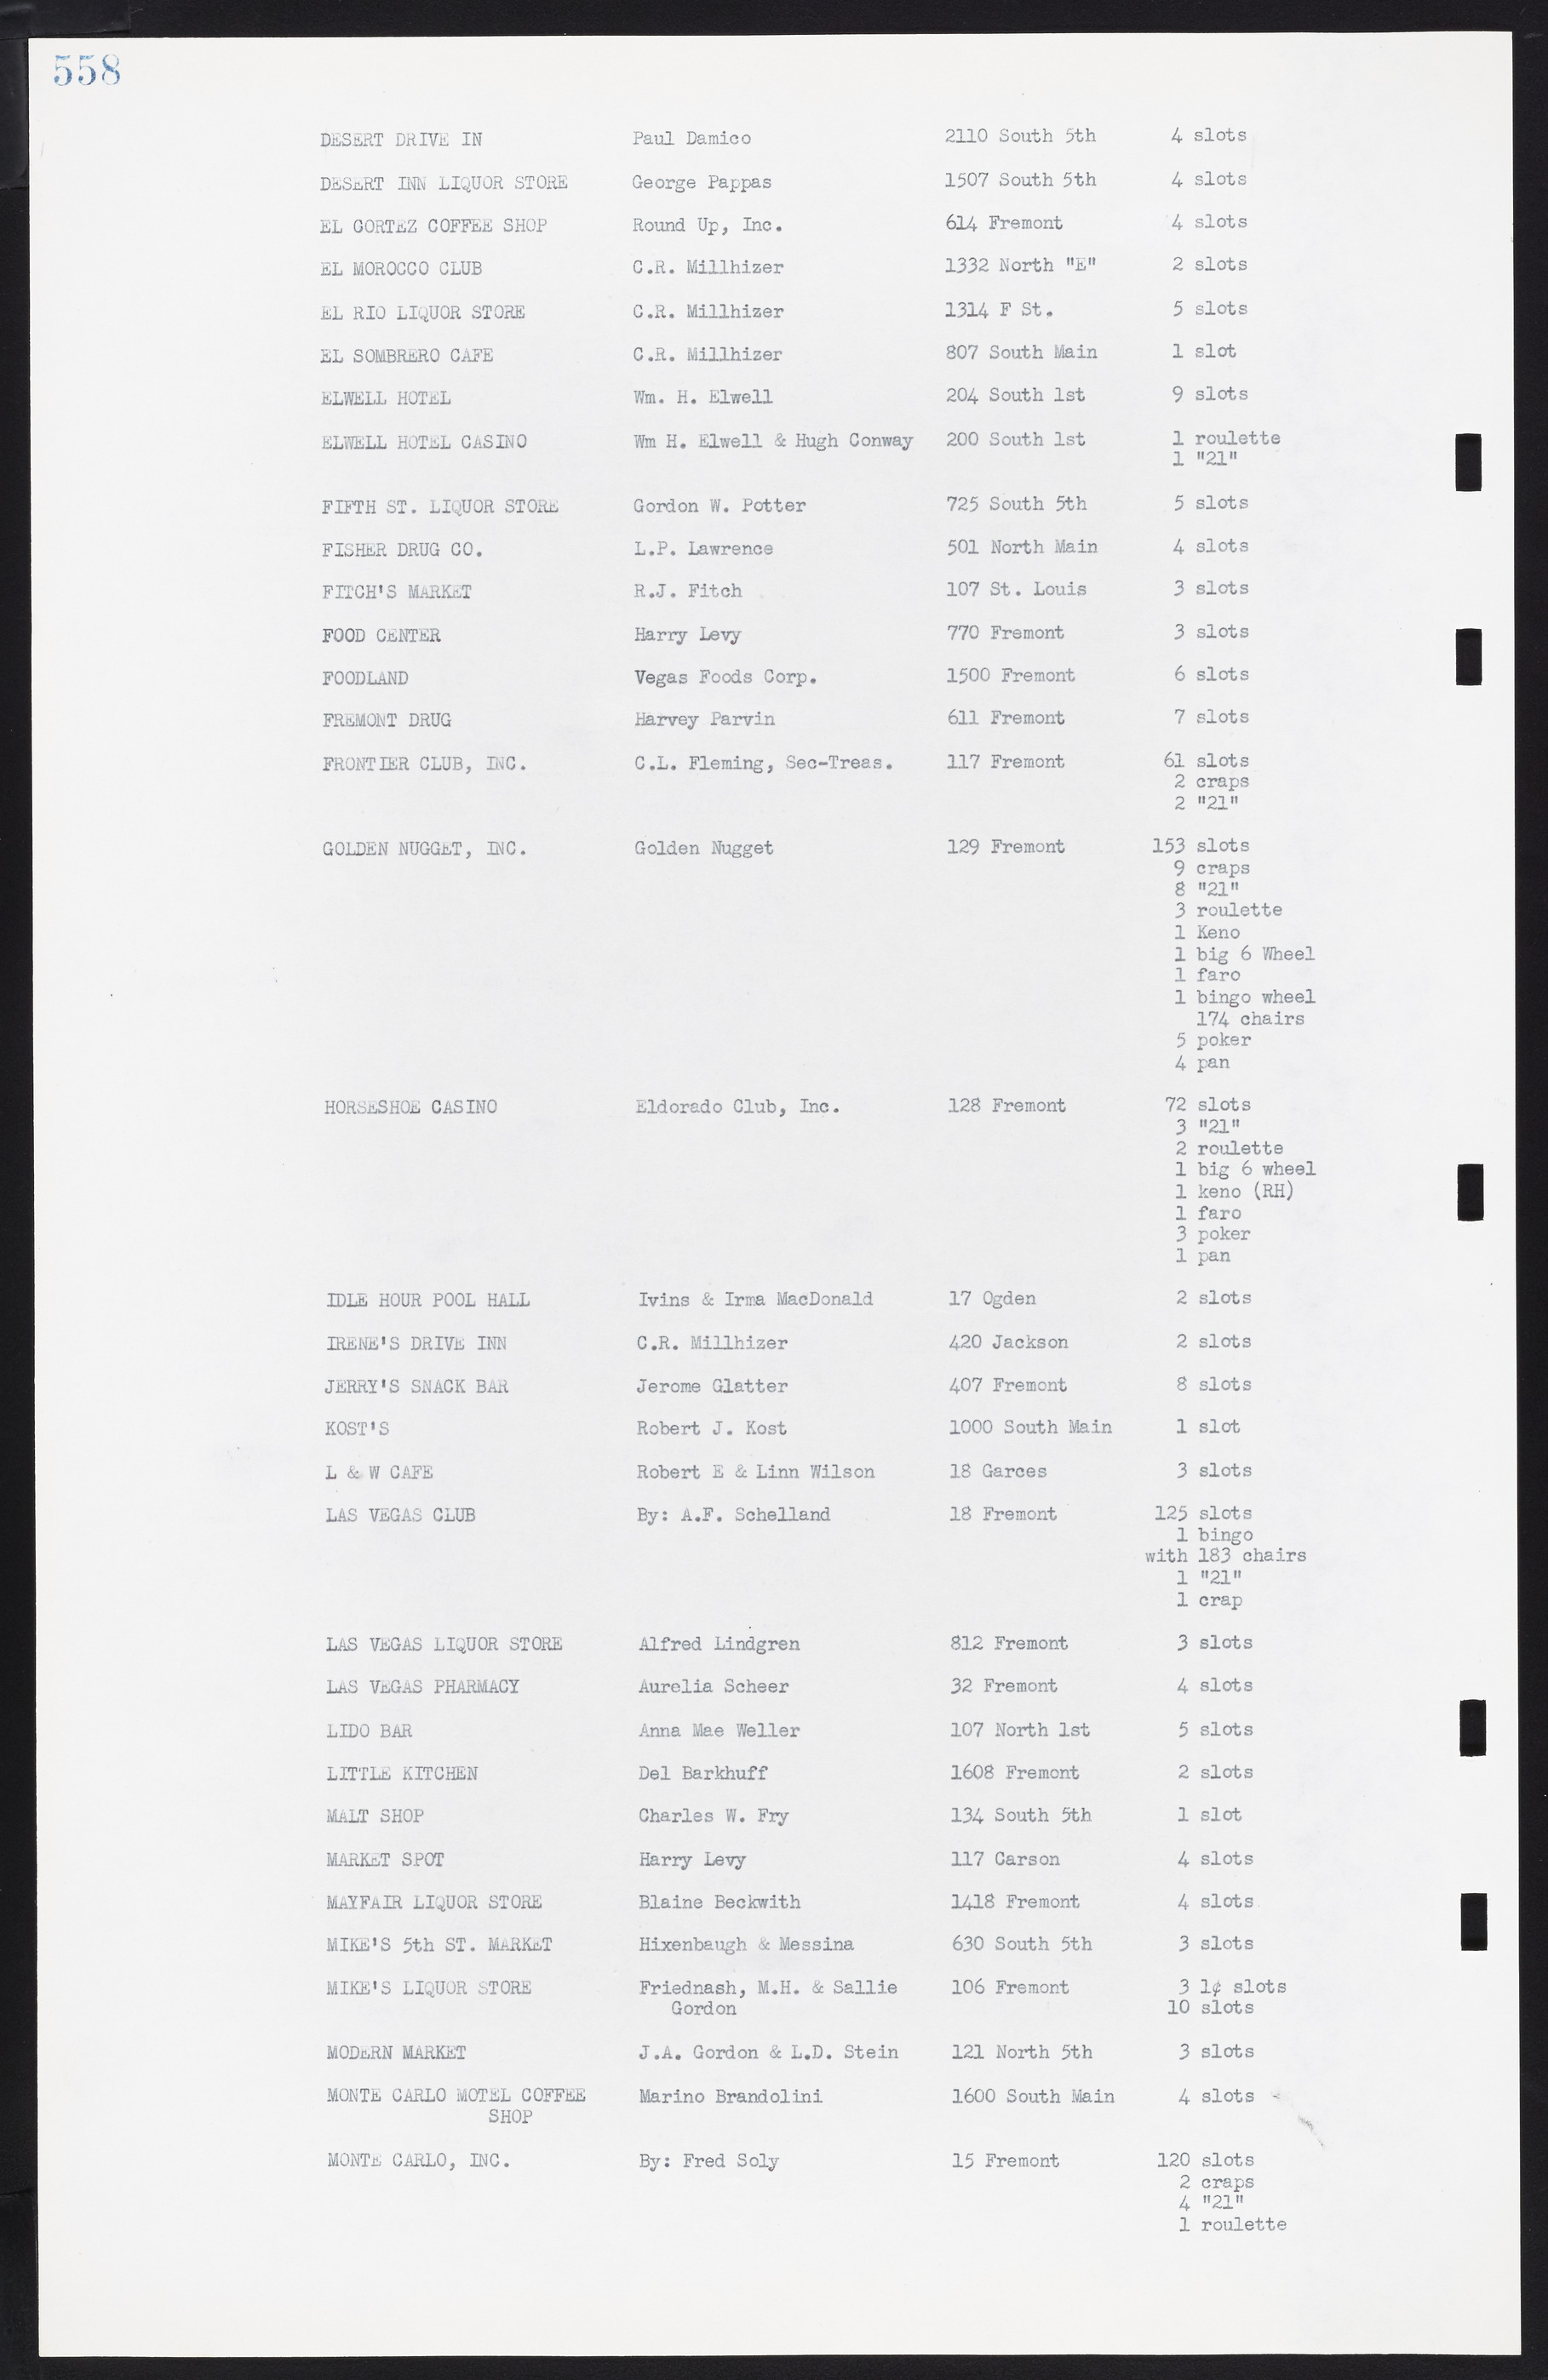 Las Vegas City Commission Minutes, November 7, 1949 to May 21, 1952, lvc000007-576